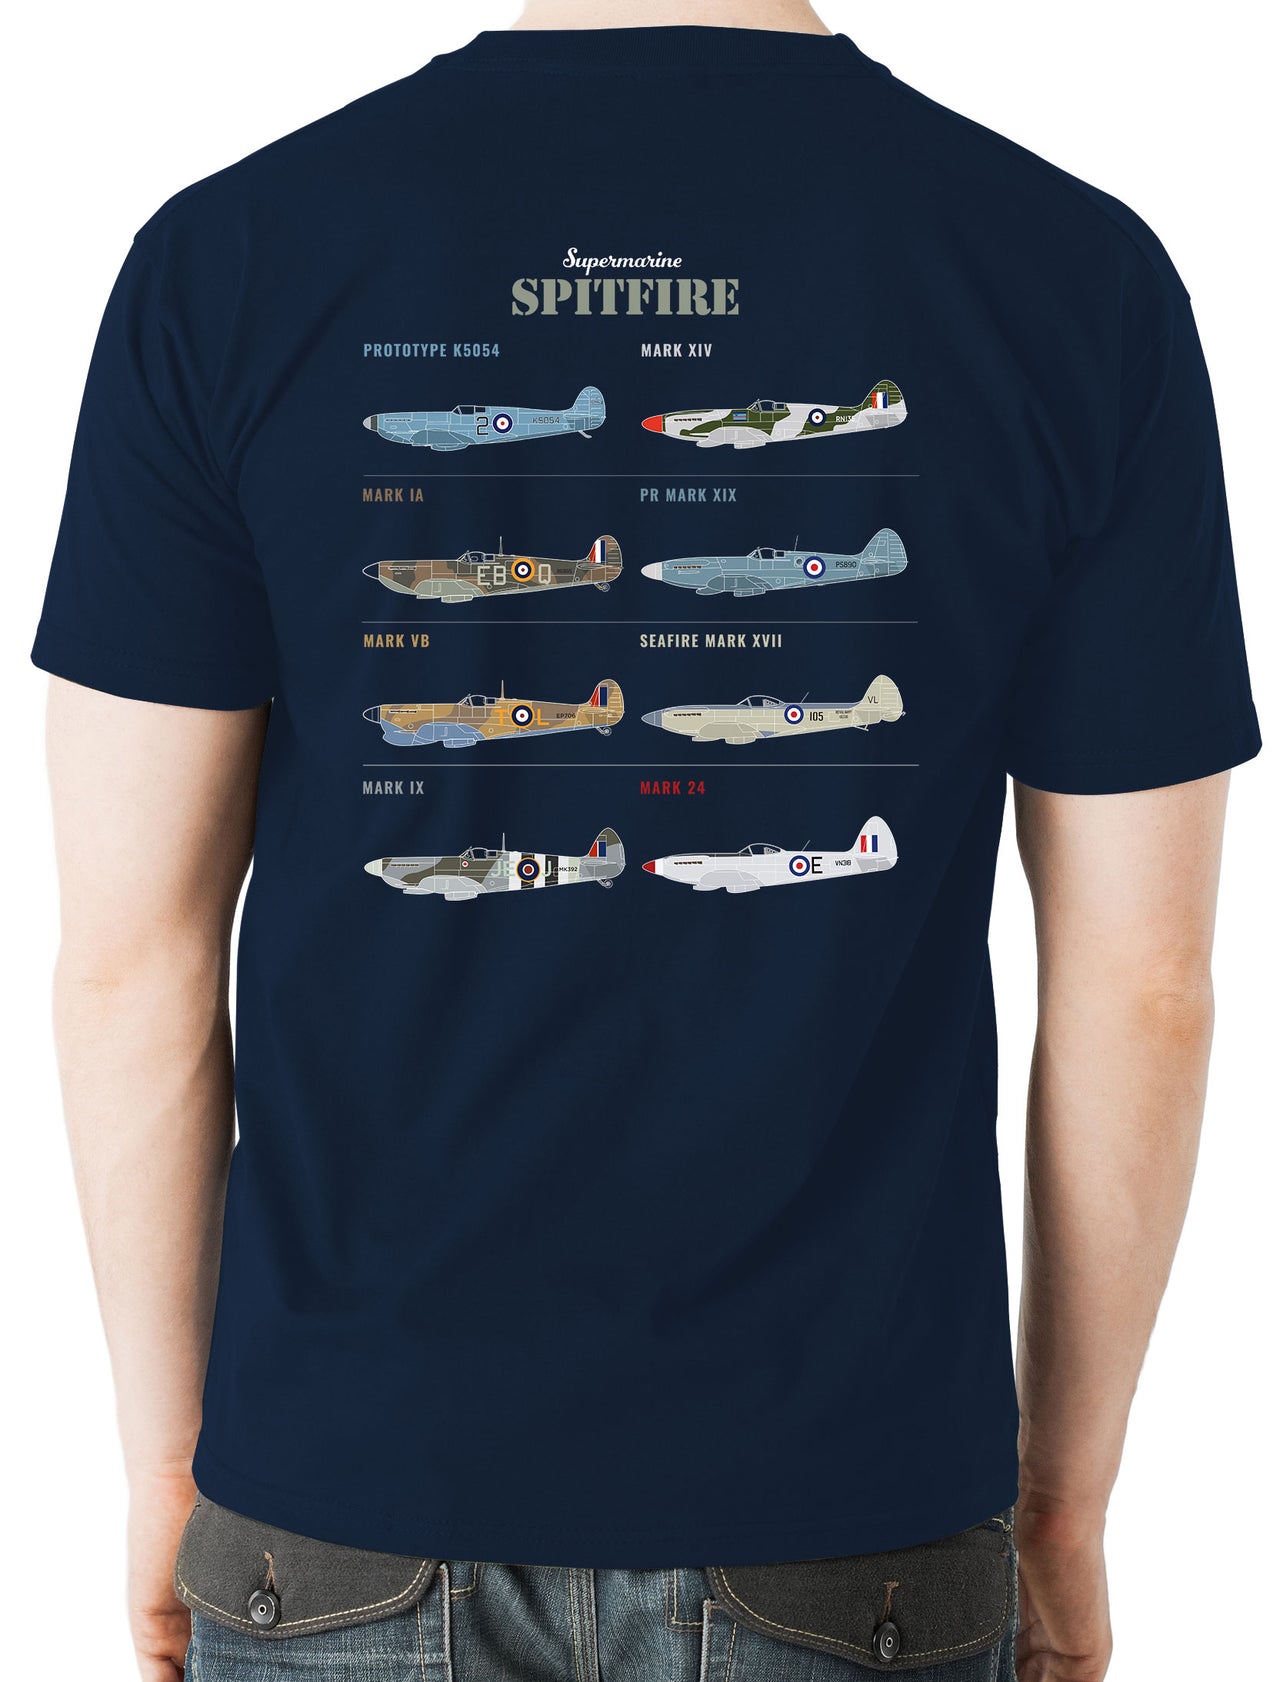 Spitfire MK VB - T-shirt